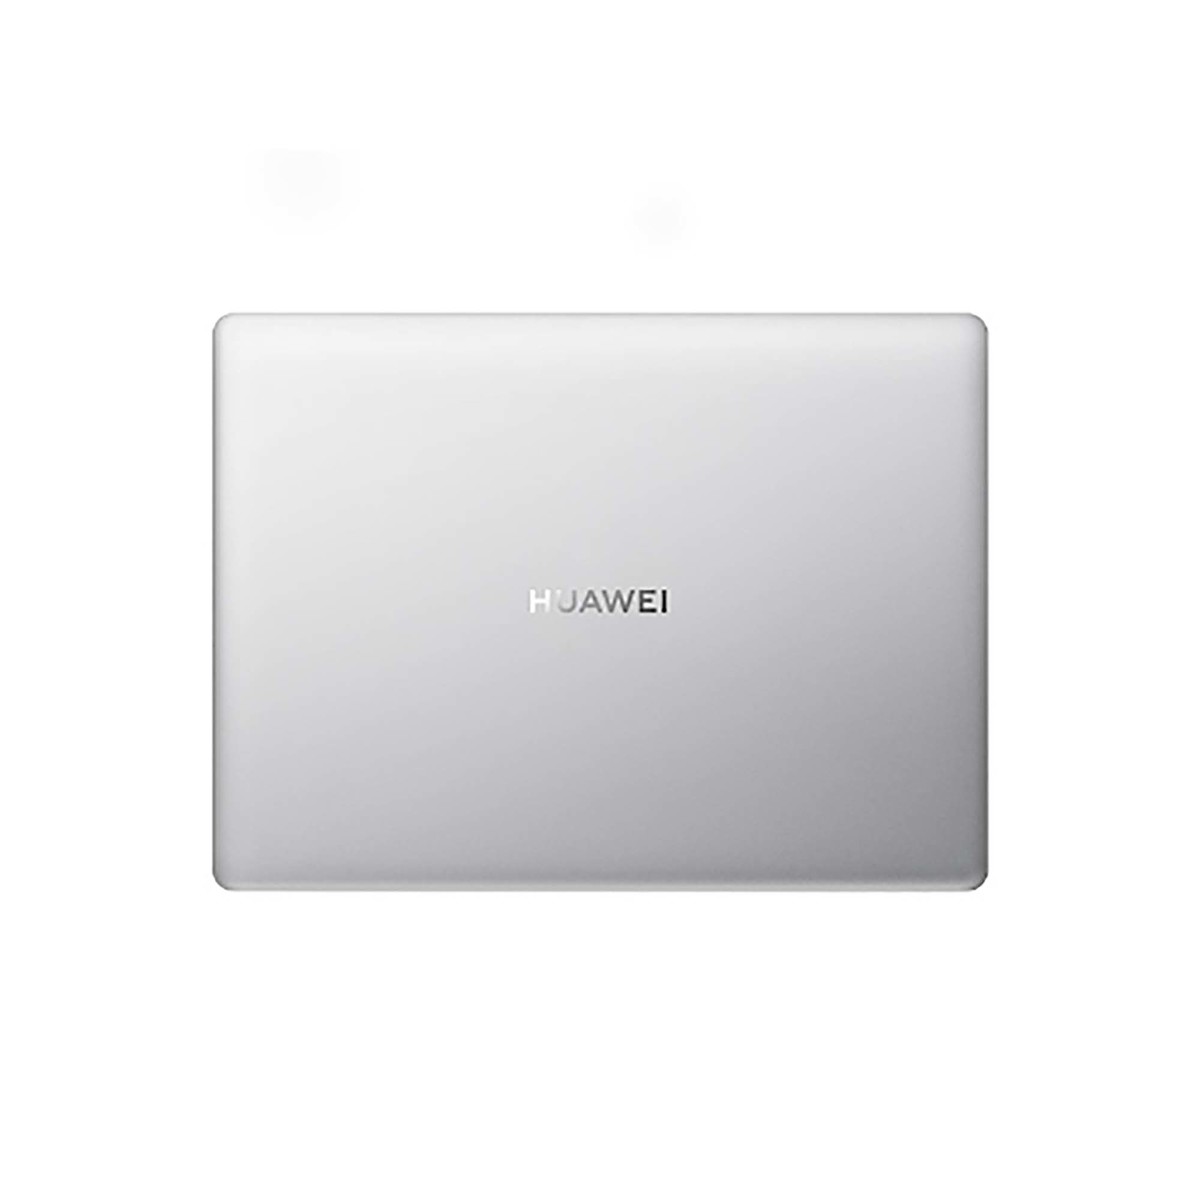  HUAWEI Matebook 13 Laptop With 13-Inch Display, Intel Core i7 Processor,16GB RAM,512GB SSD ,2GB NVIDIA GeForce MX250 Graphics Card,Space Grey